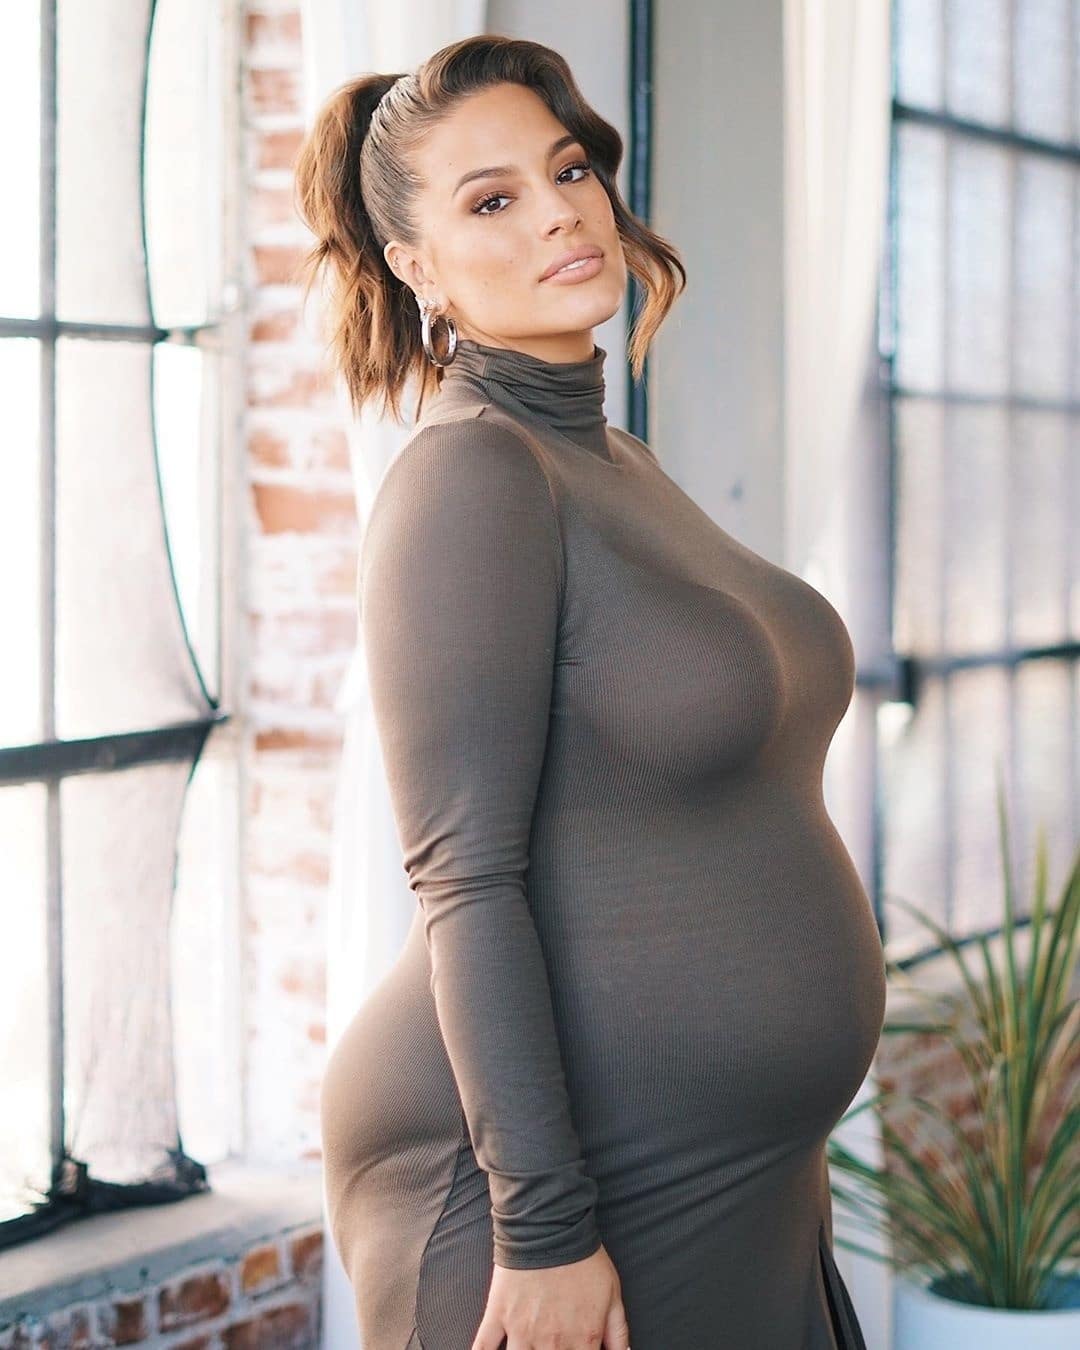 Pregnant Ashley Graham